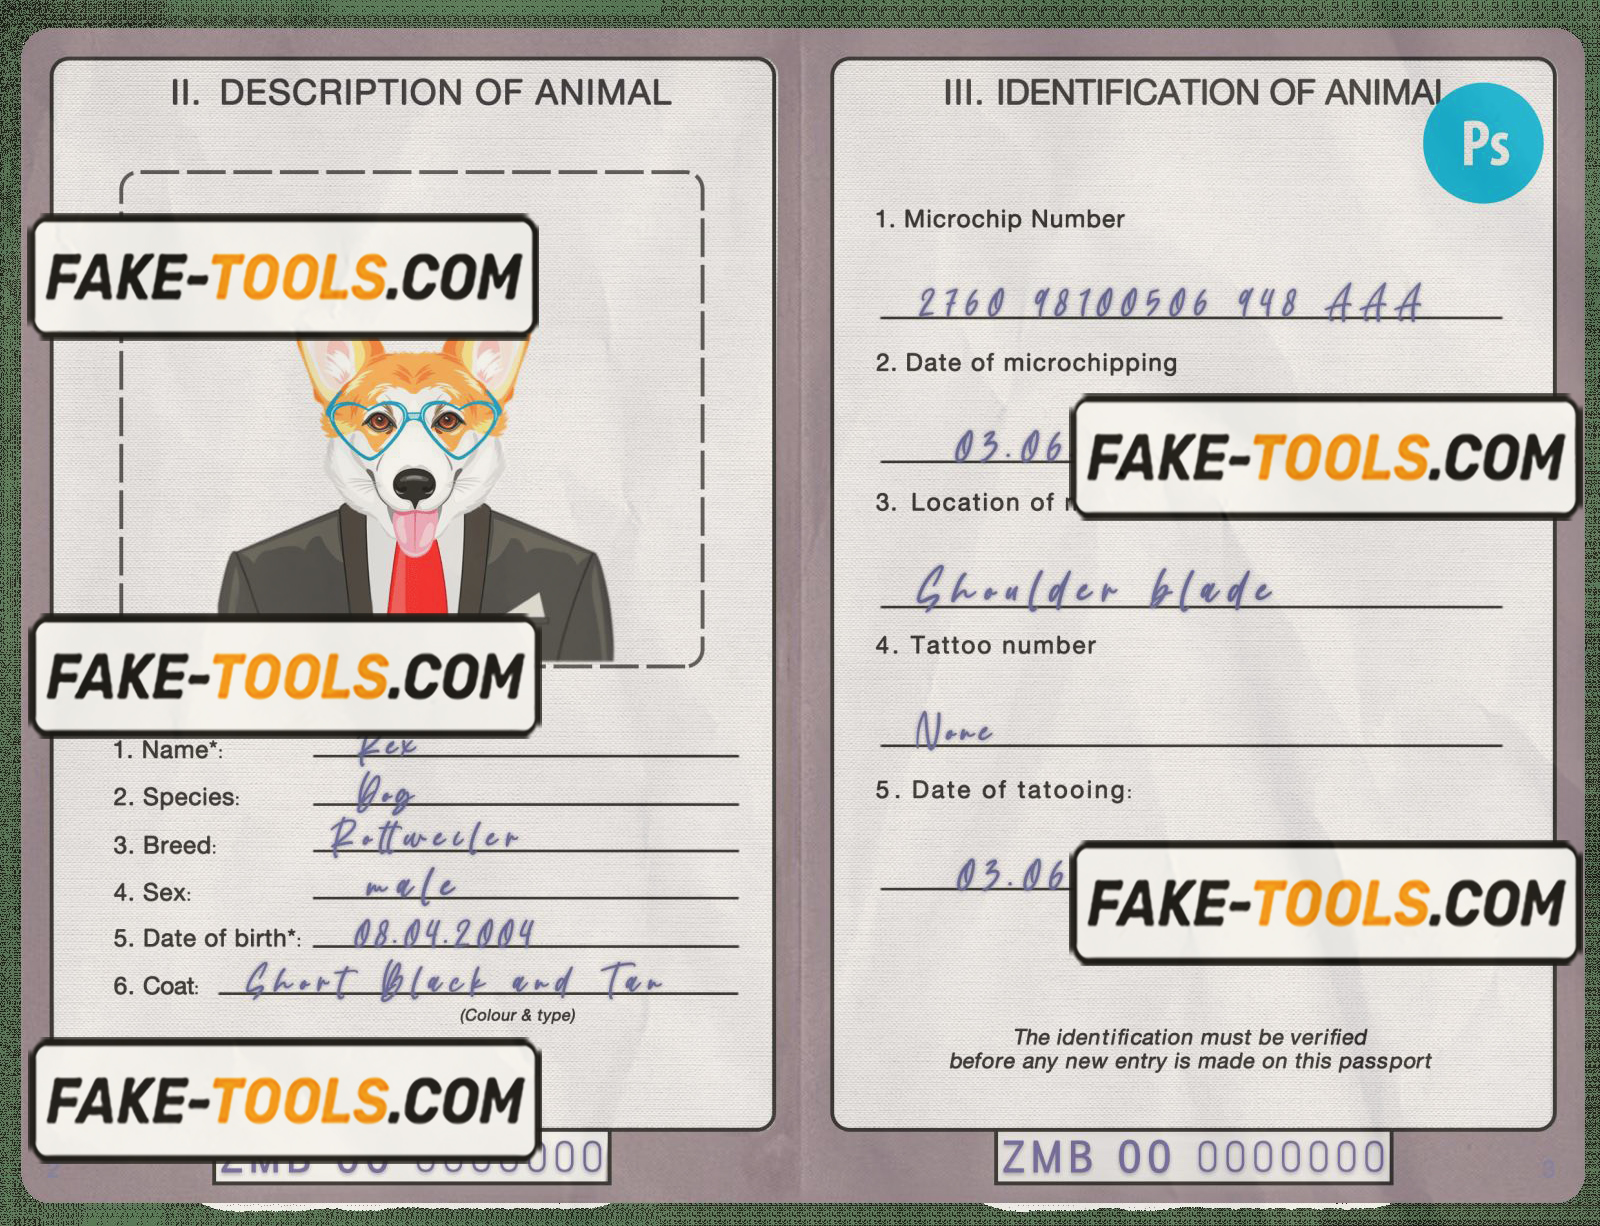 Zambia dog (animal, pet) passport PSD template, fully editable scan effect